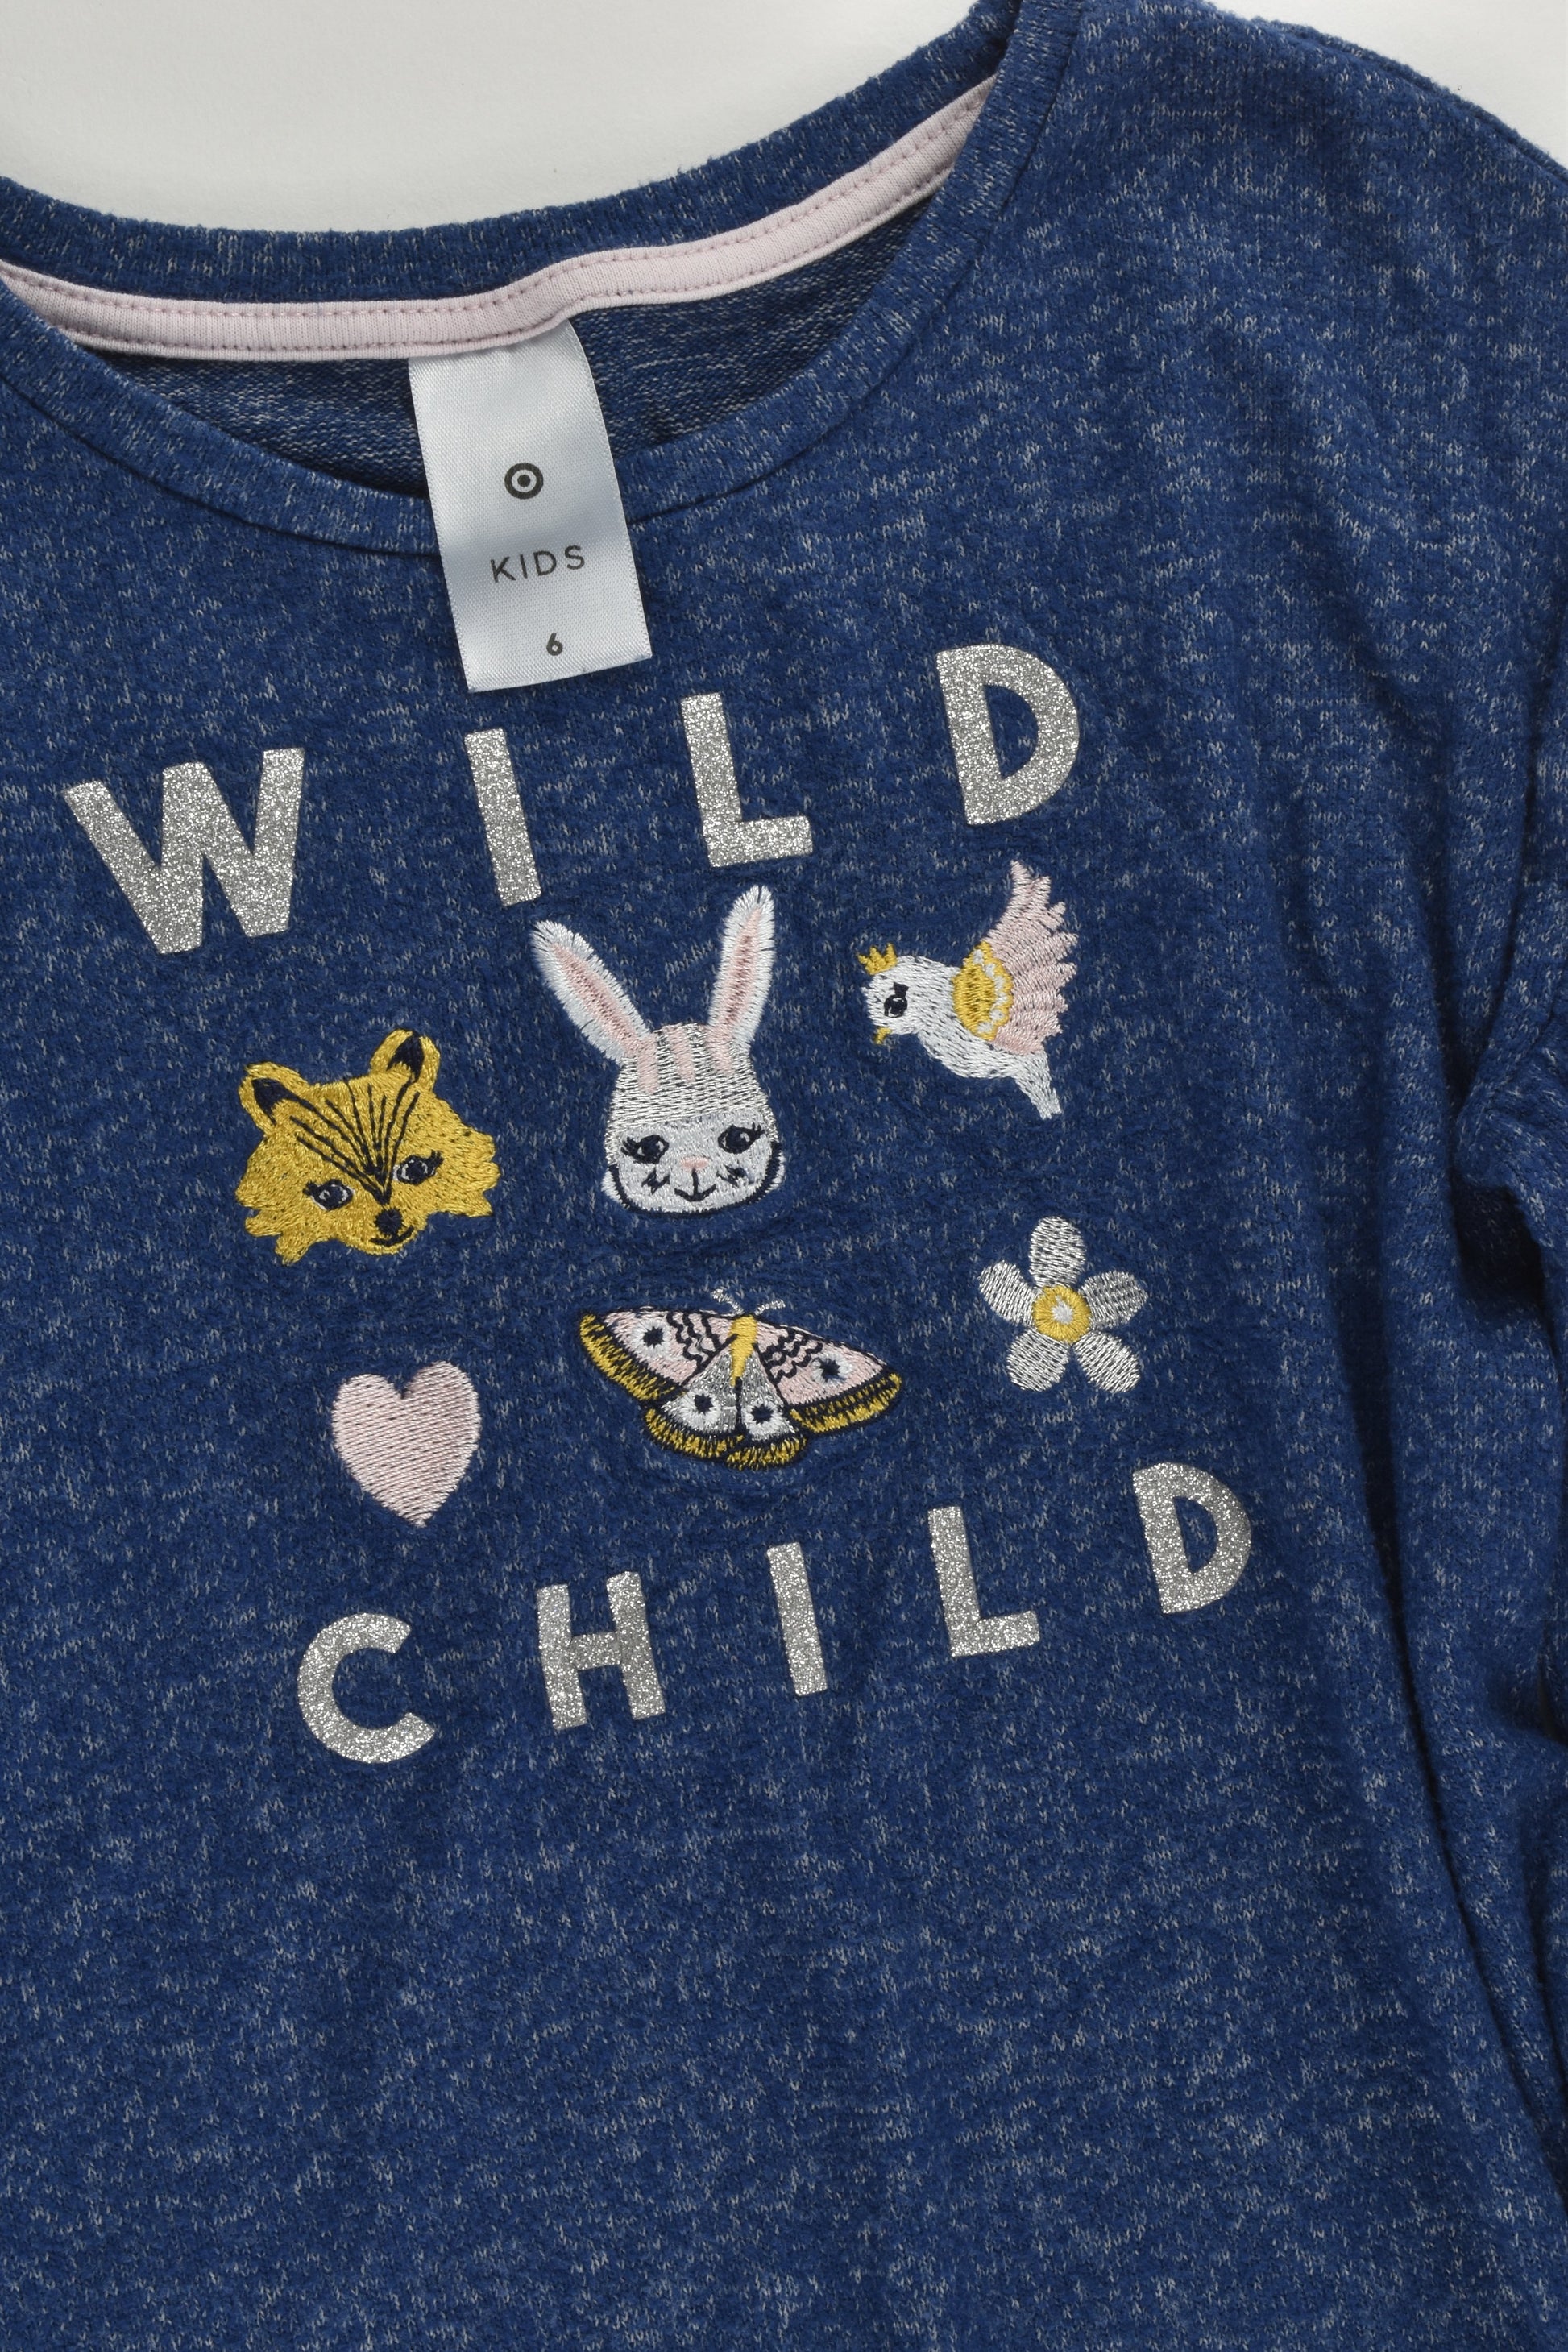 Target Size 6 'Wild Child' Knitted Jumper